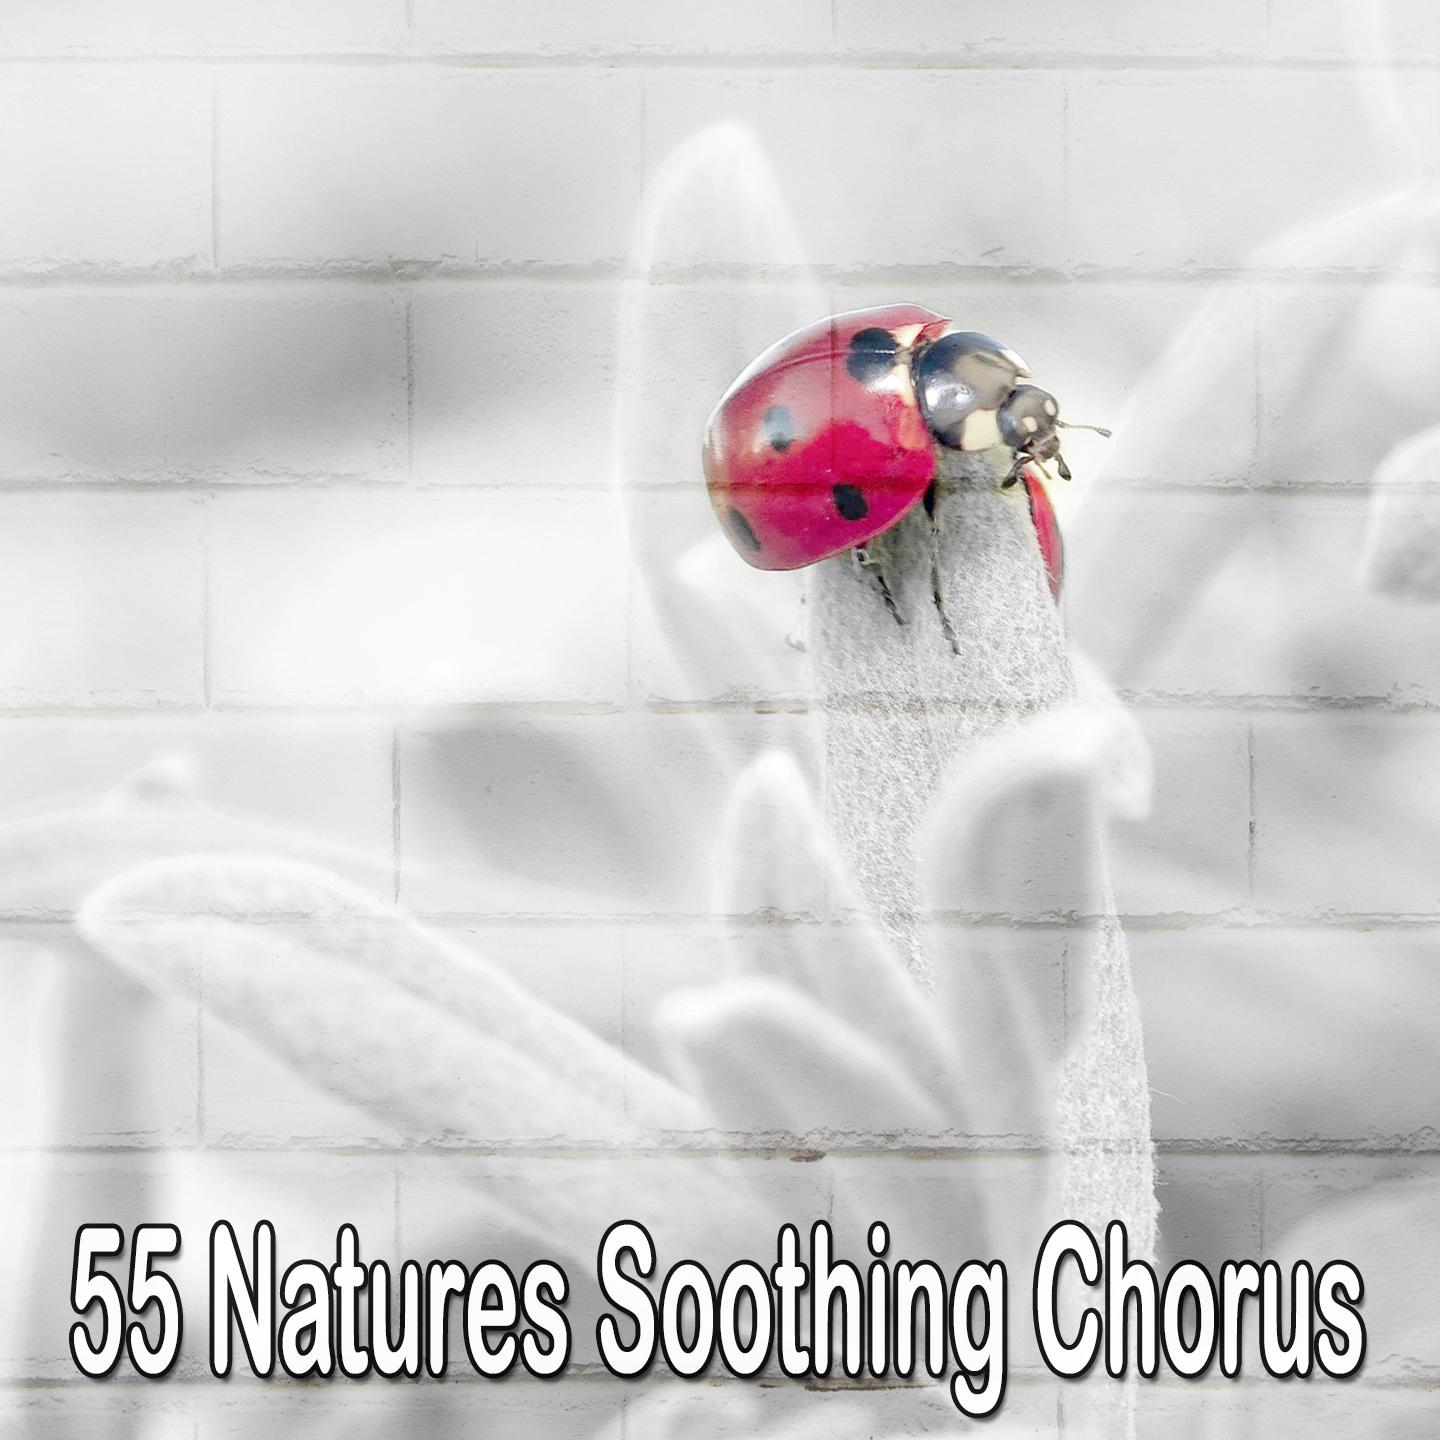 55 Natures Soothing Chorus